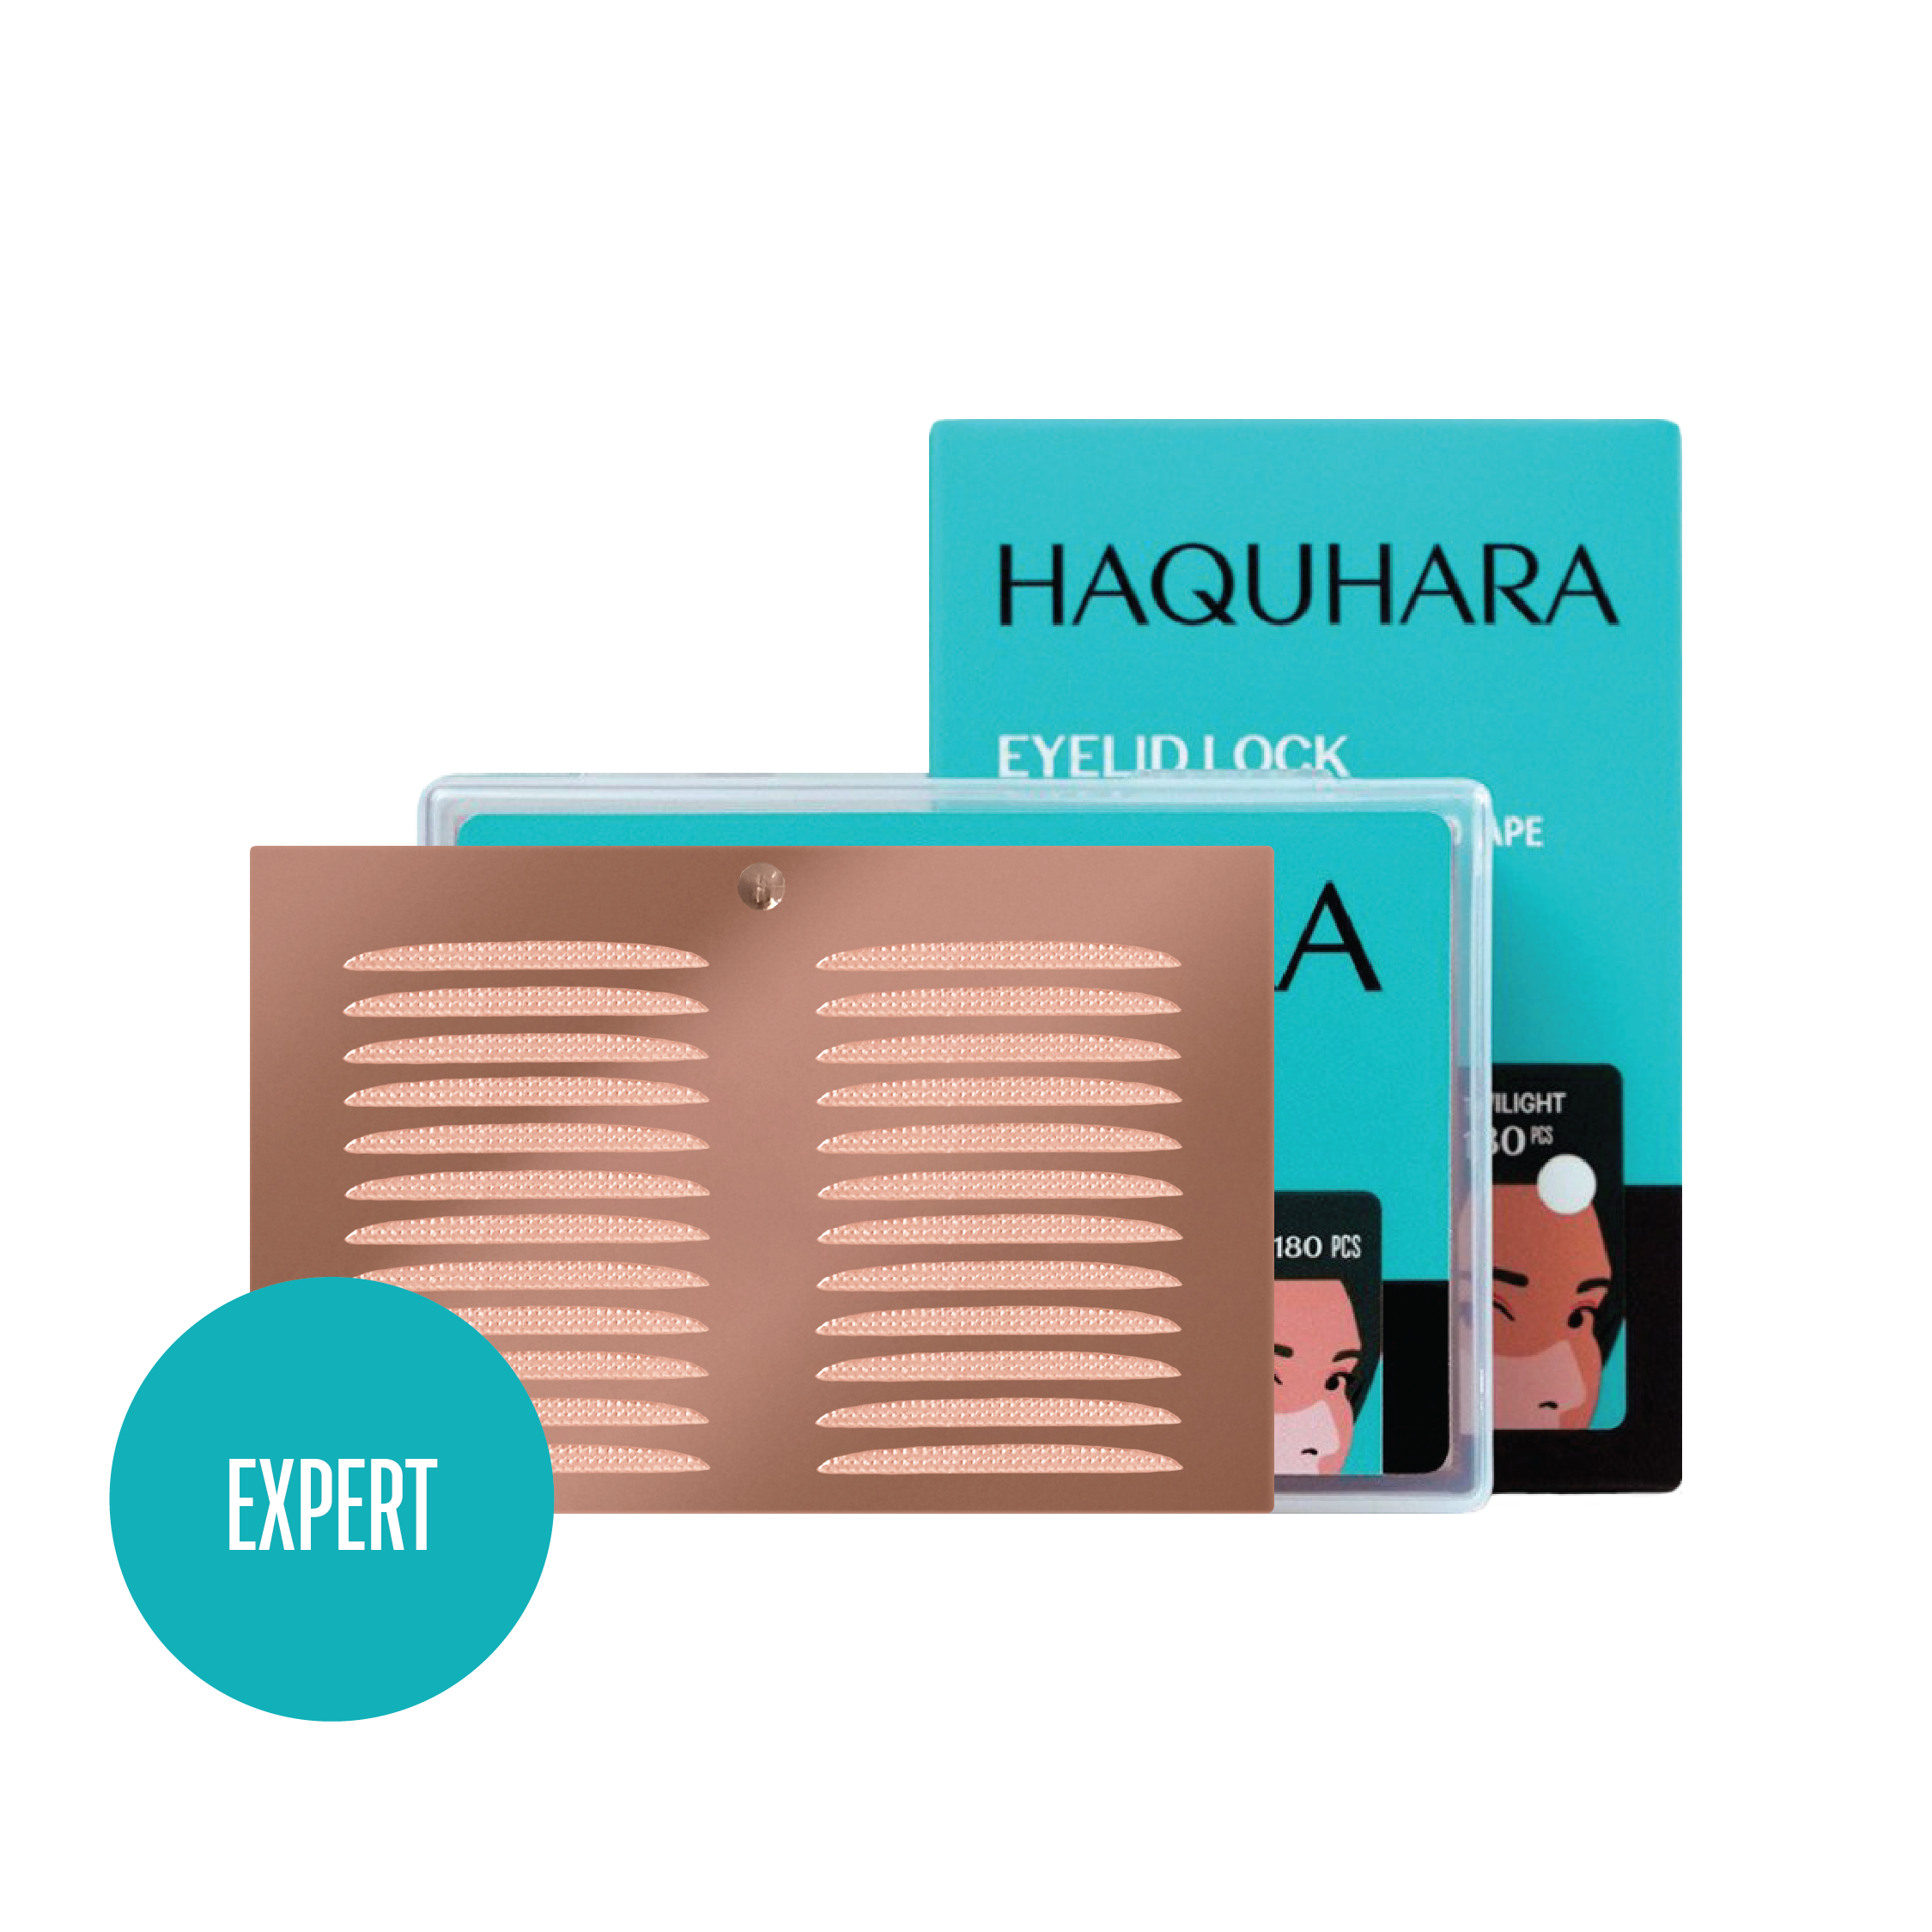 Haquhara Eyelid Lock Expert Slim, Eye Scotch 3M Eyelid Tape Transparent Porous